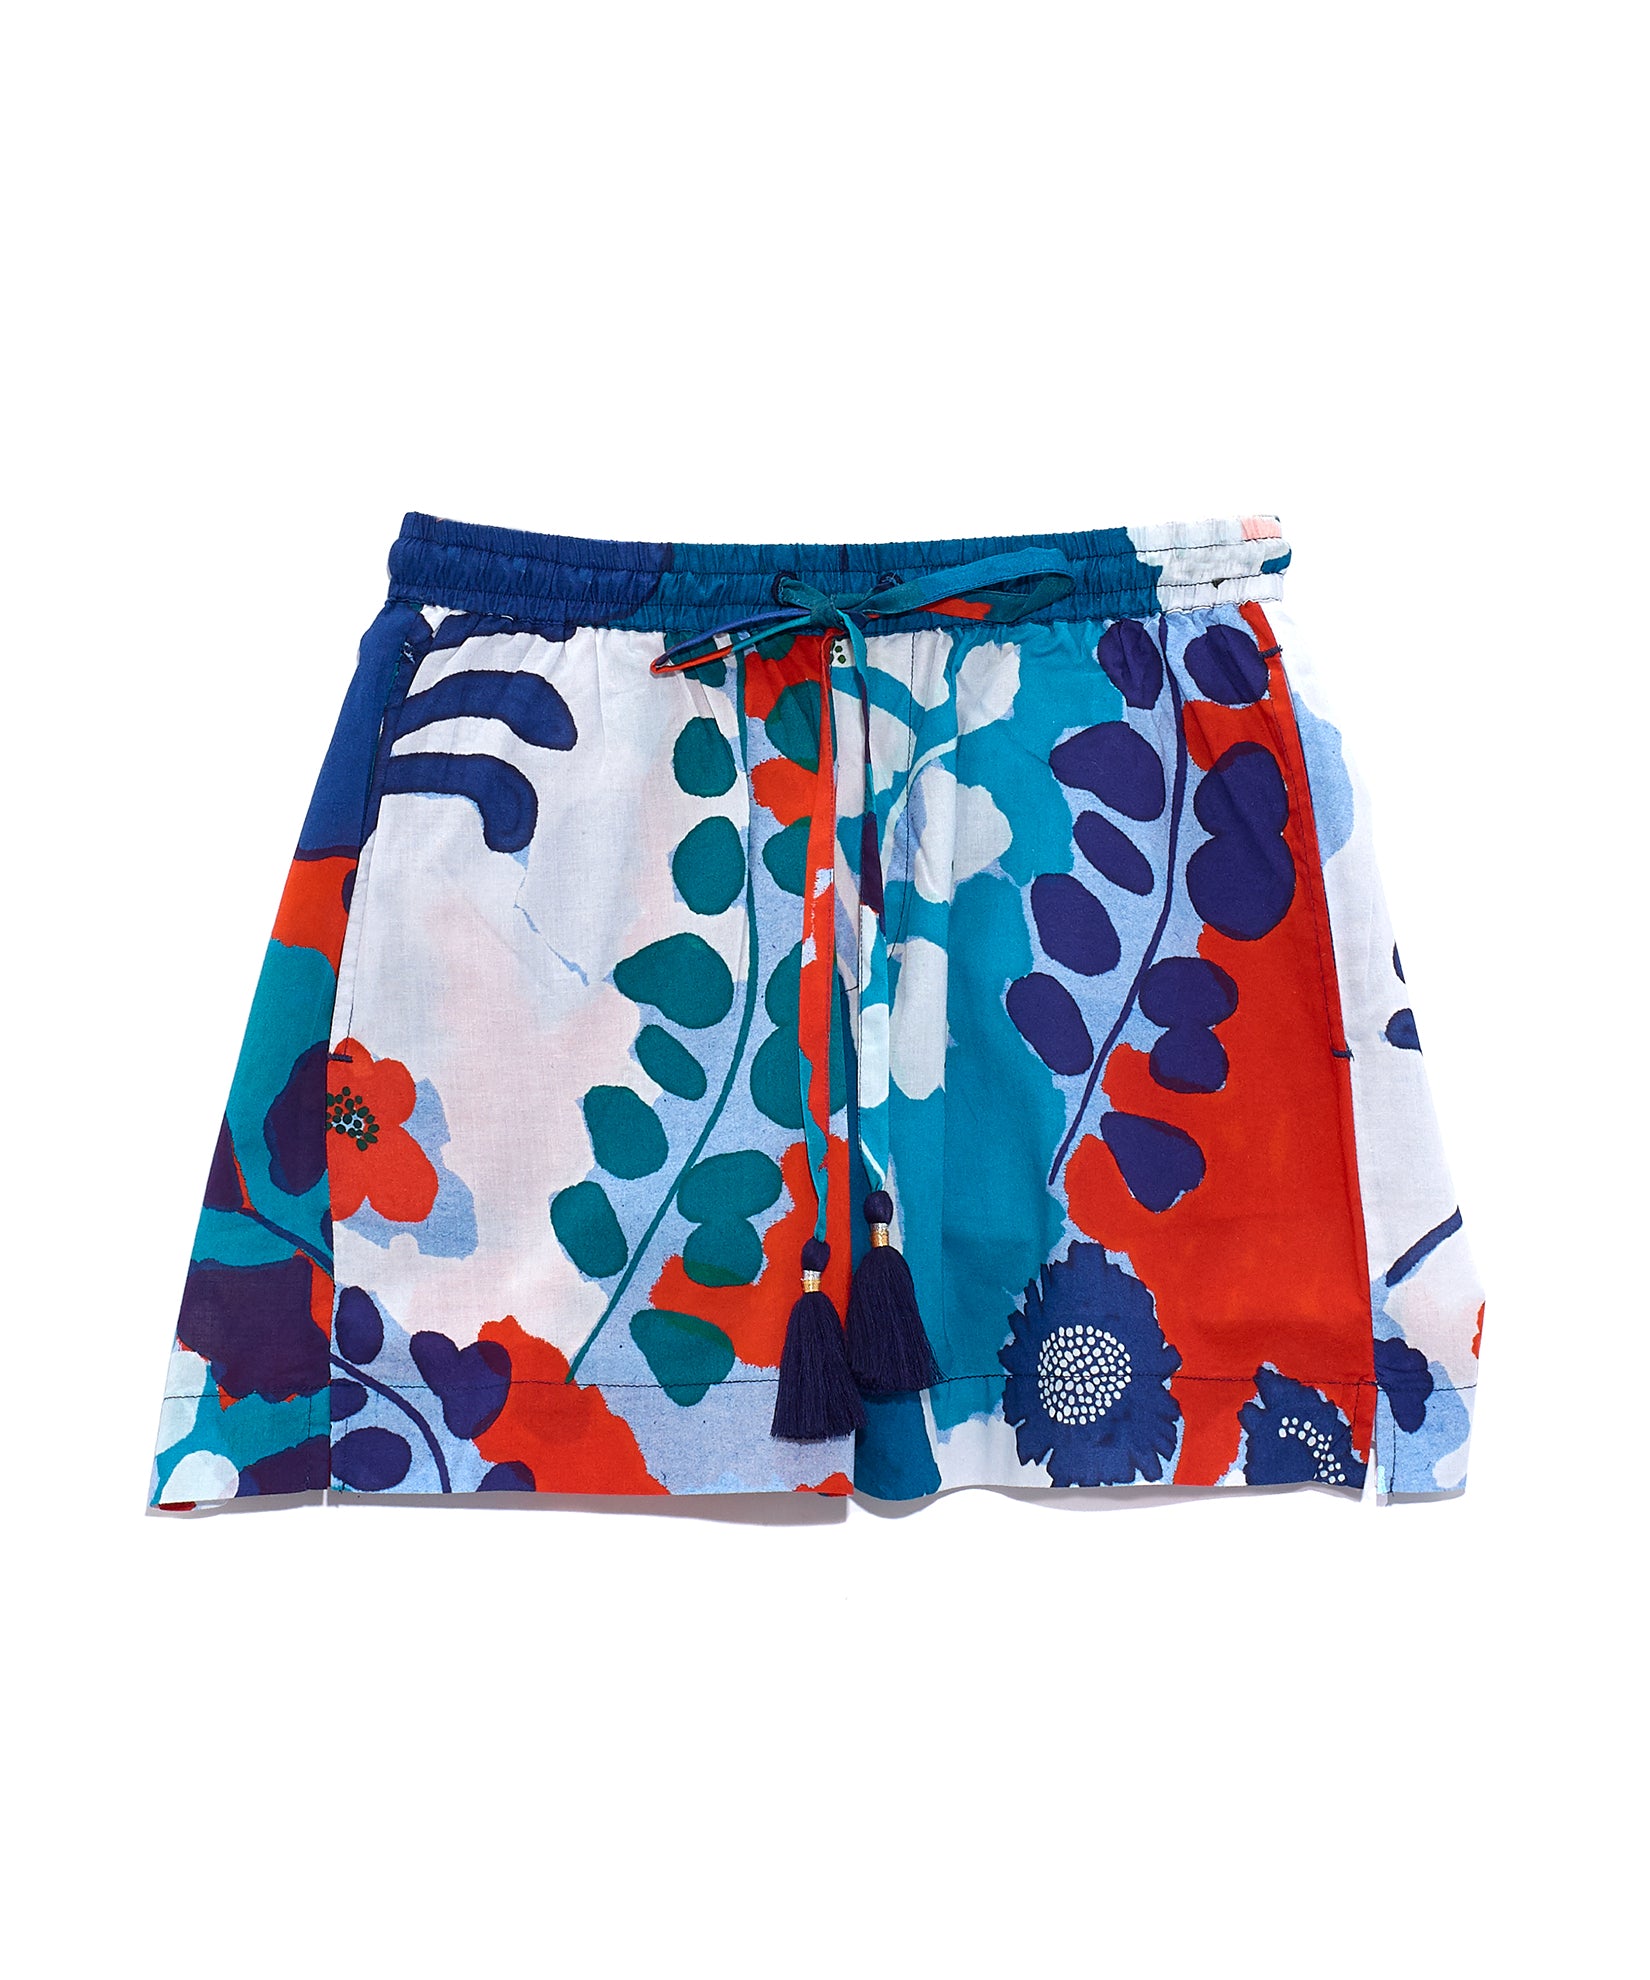 Wild Floral Beach Shorts in color Atlantis